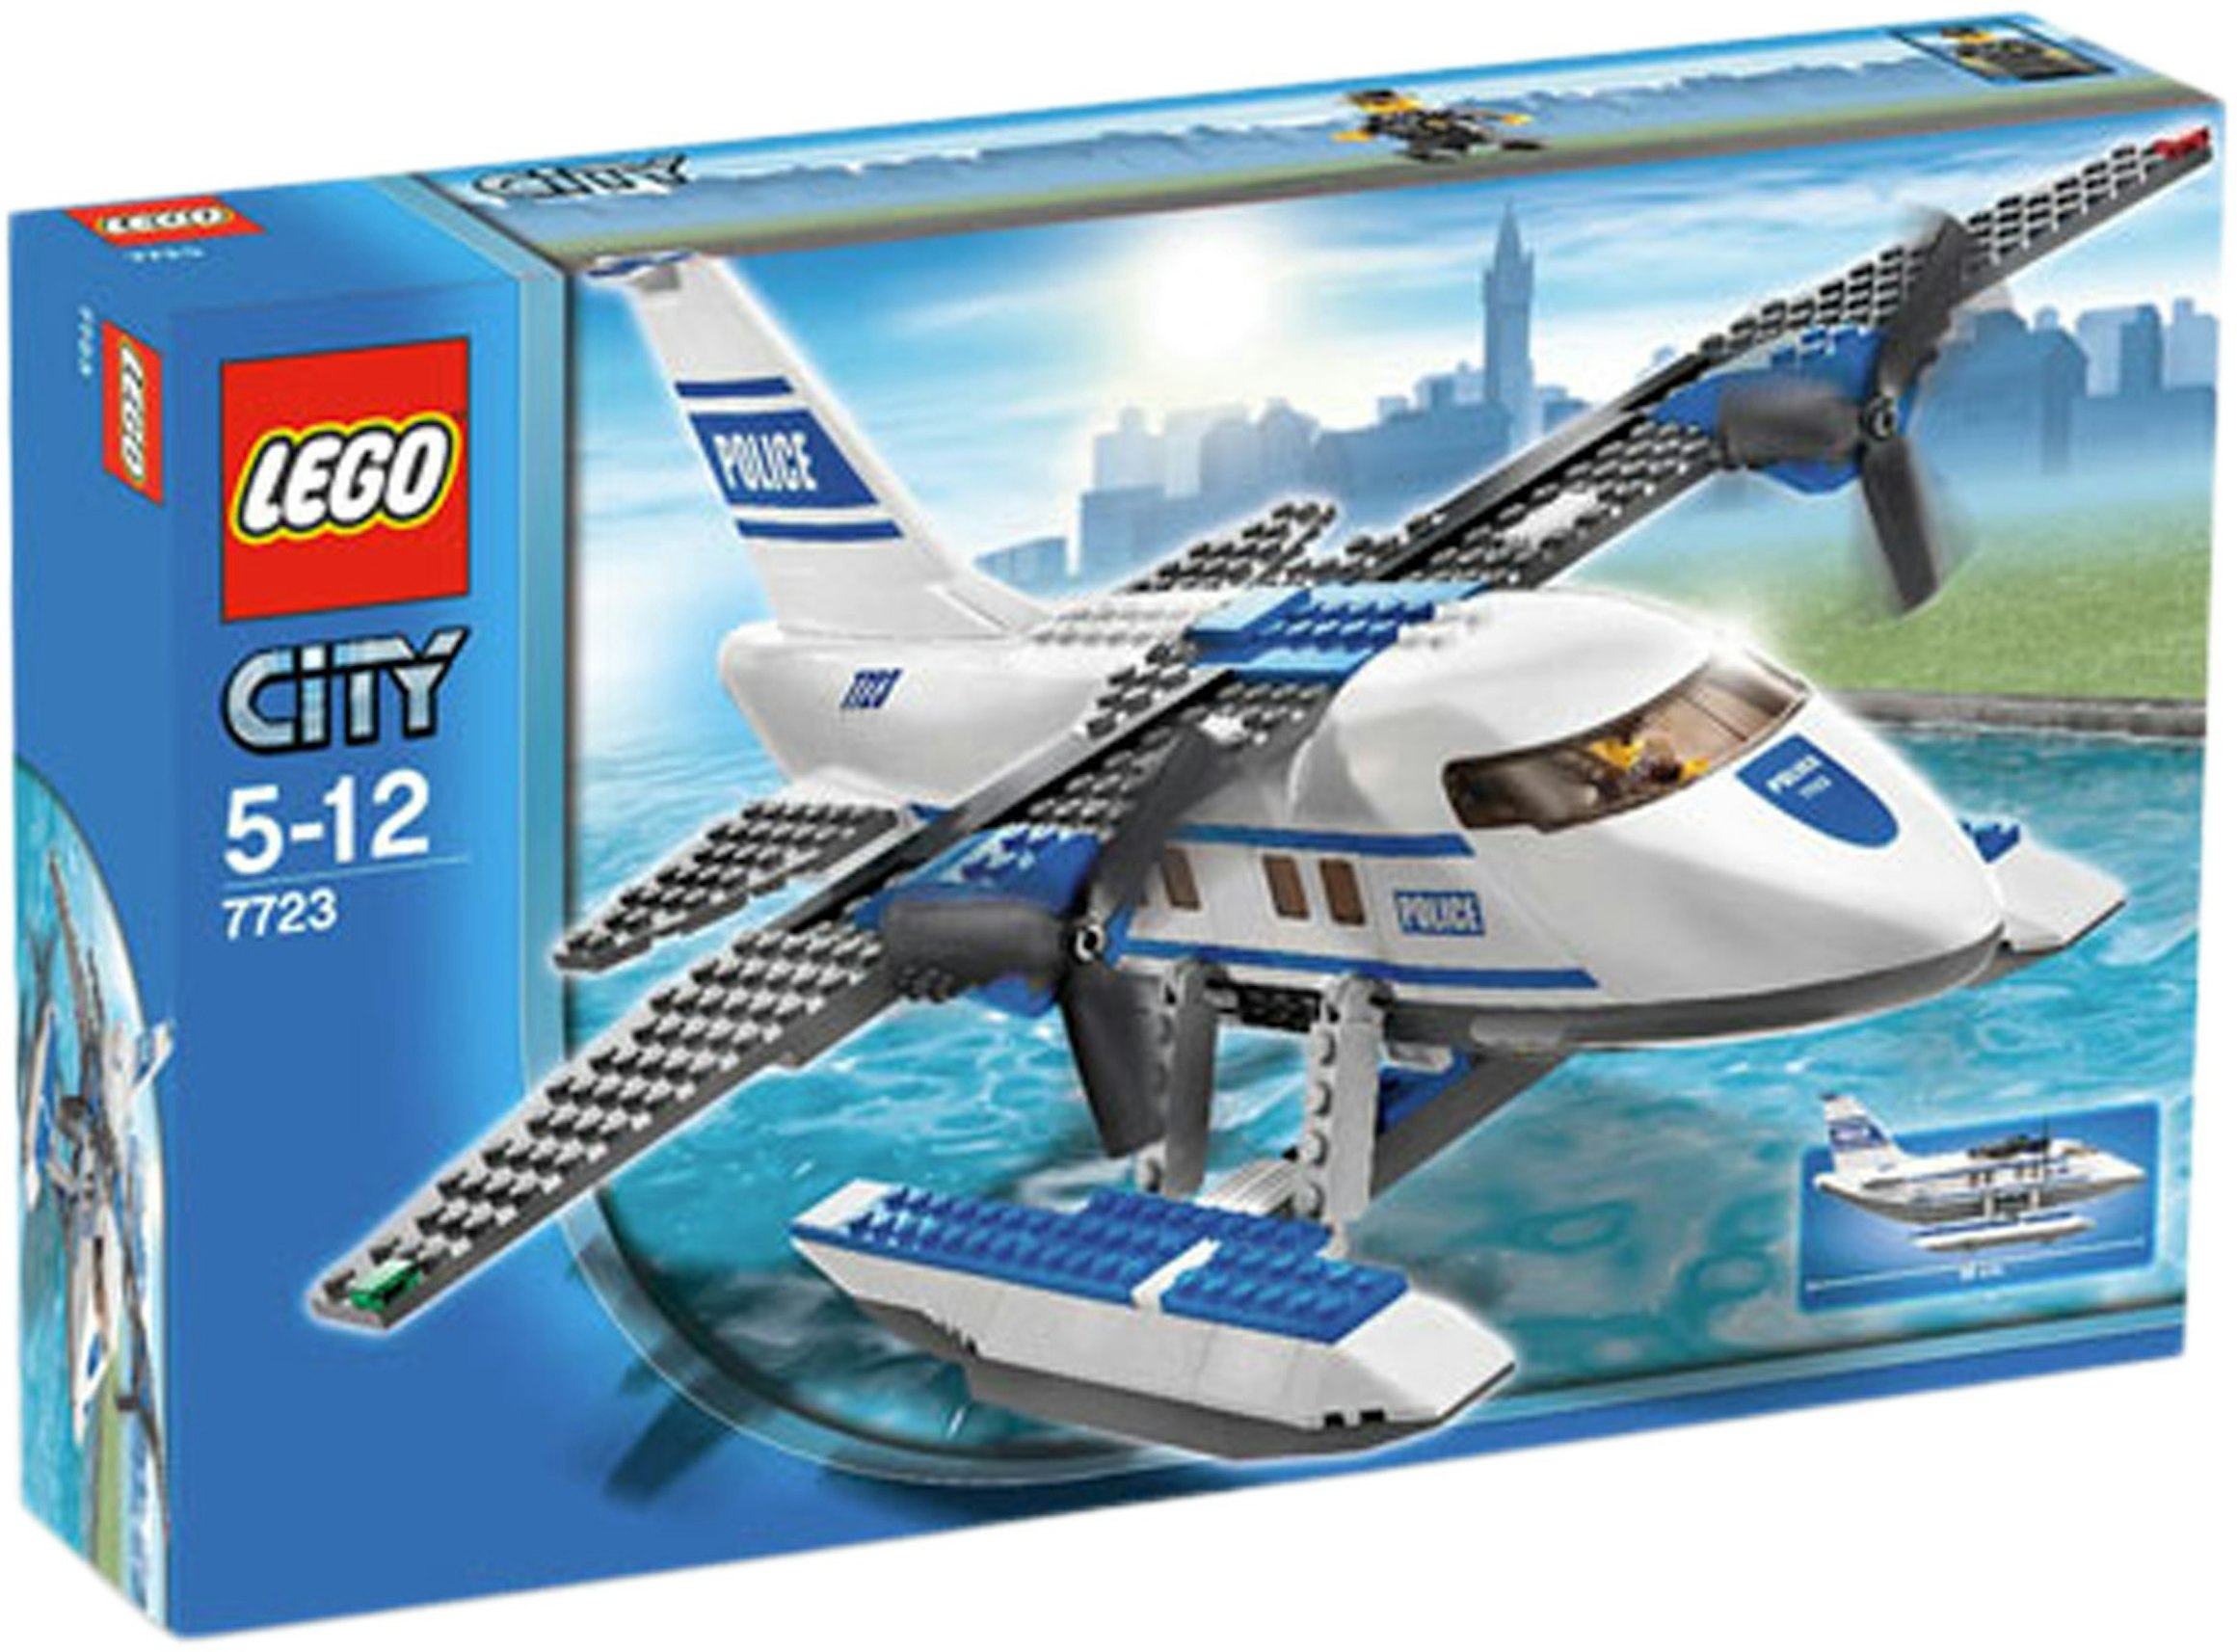 LEGO City Plane Set 7723 -